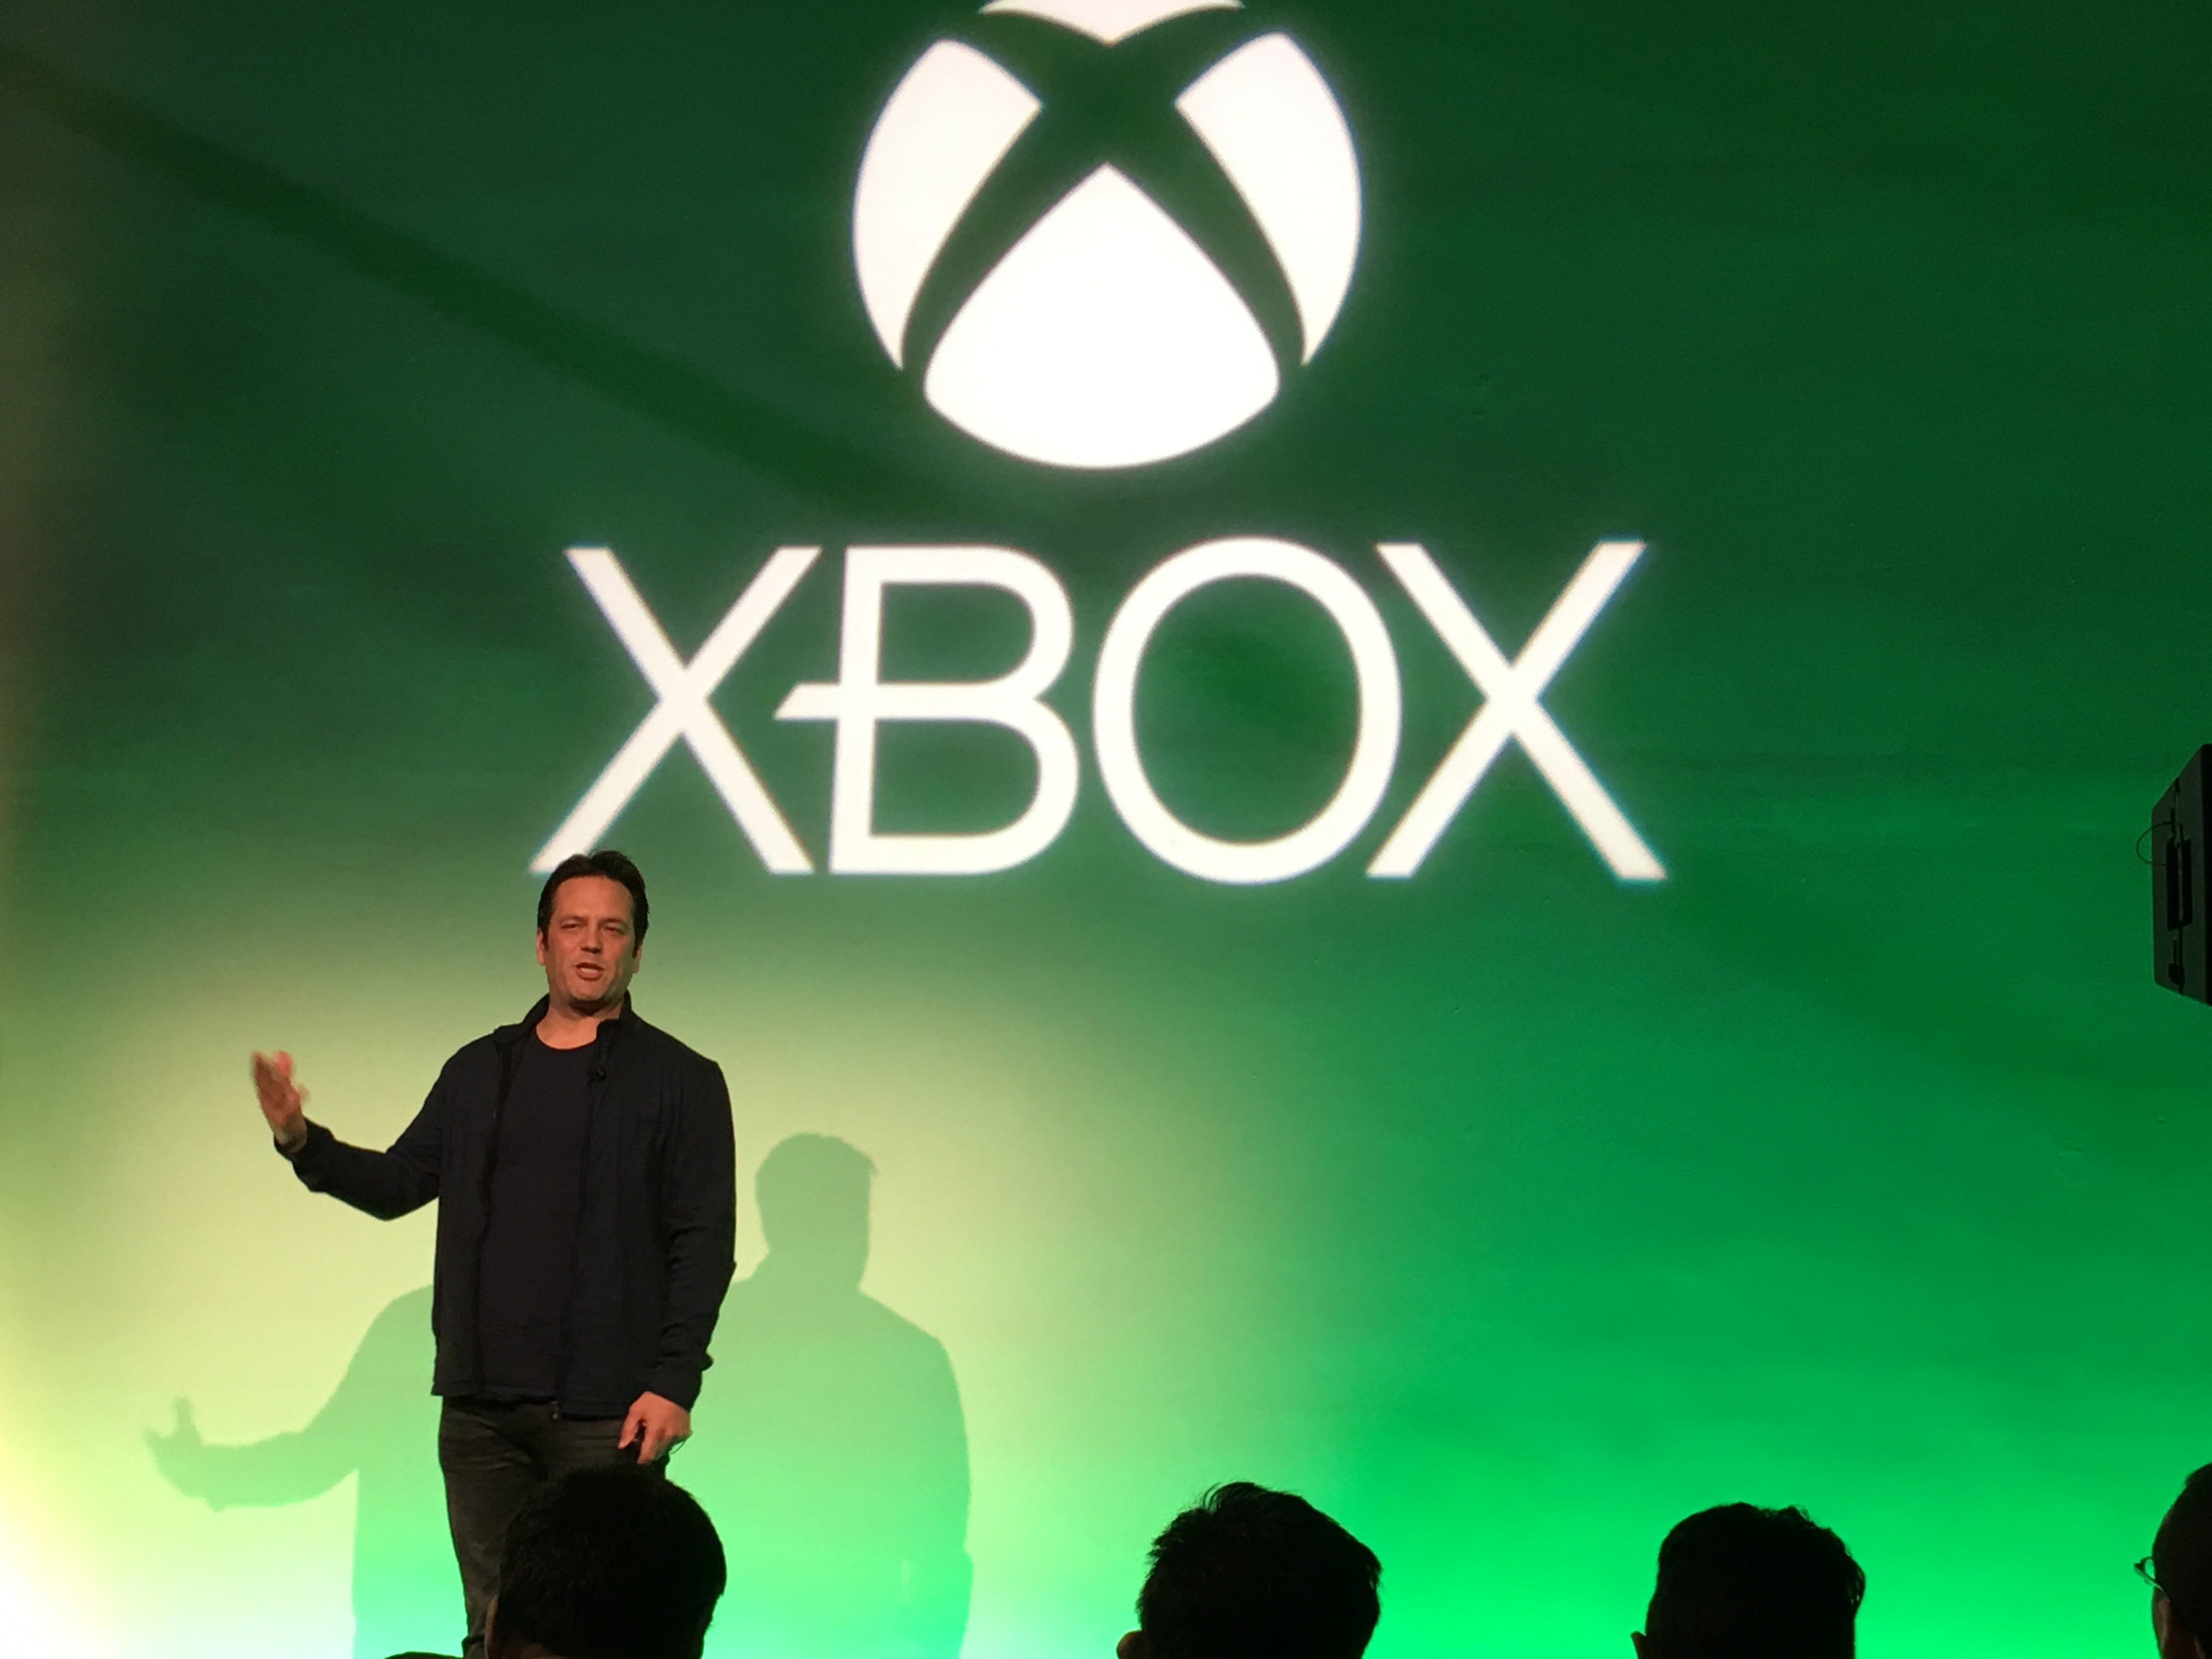 Xbox-sjef Phil Spencer ser for seg en abonnementsmodell á la Netflix i fremtiden.